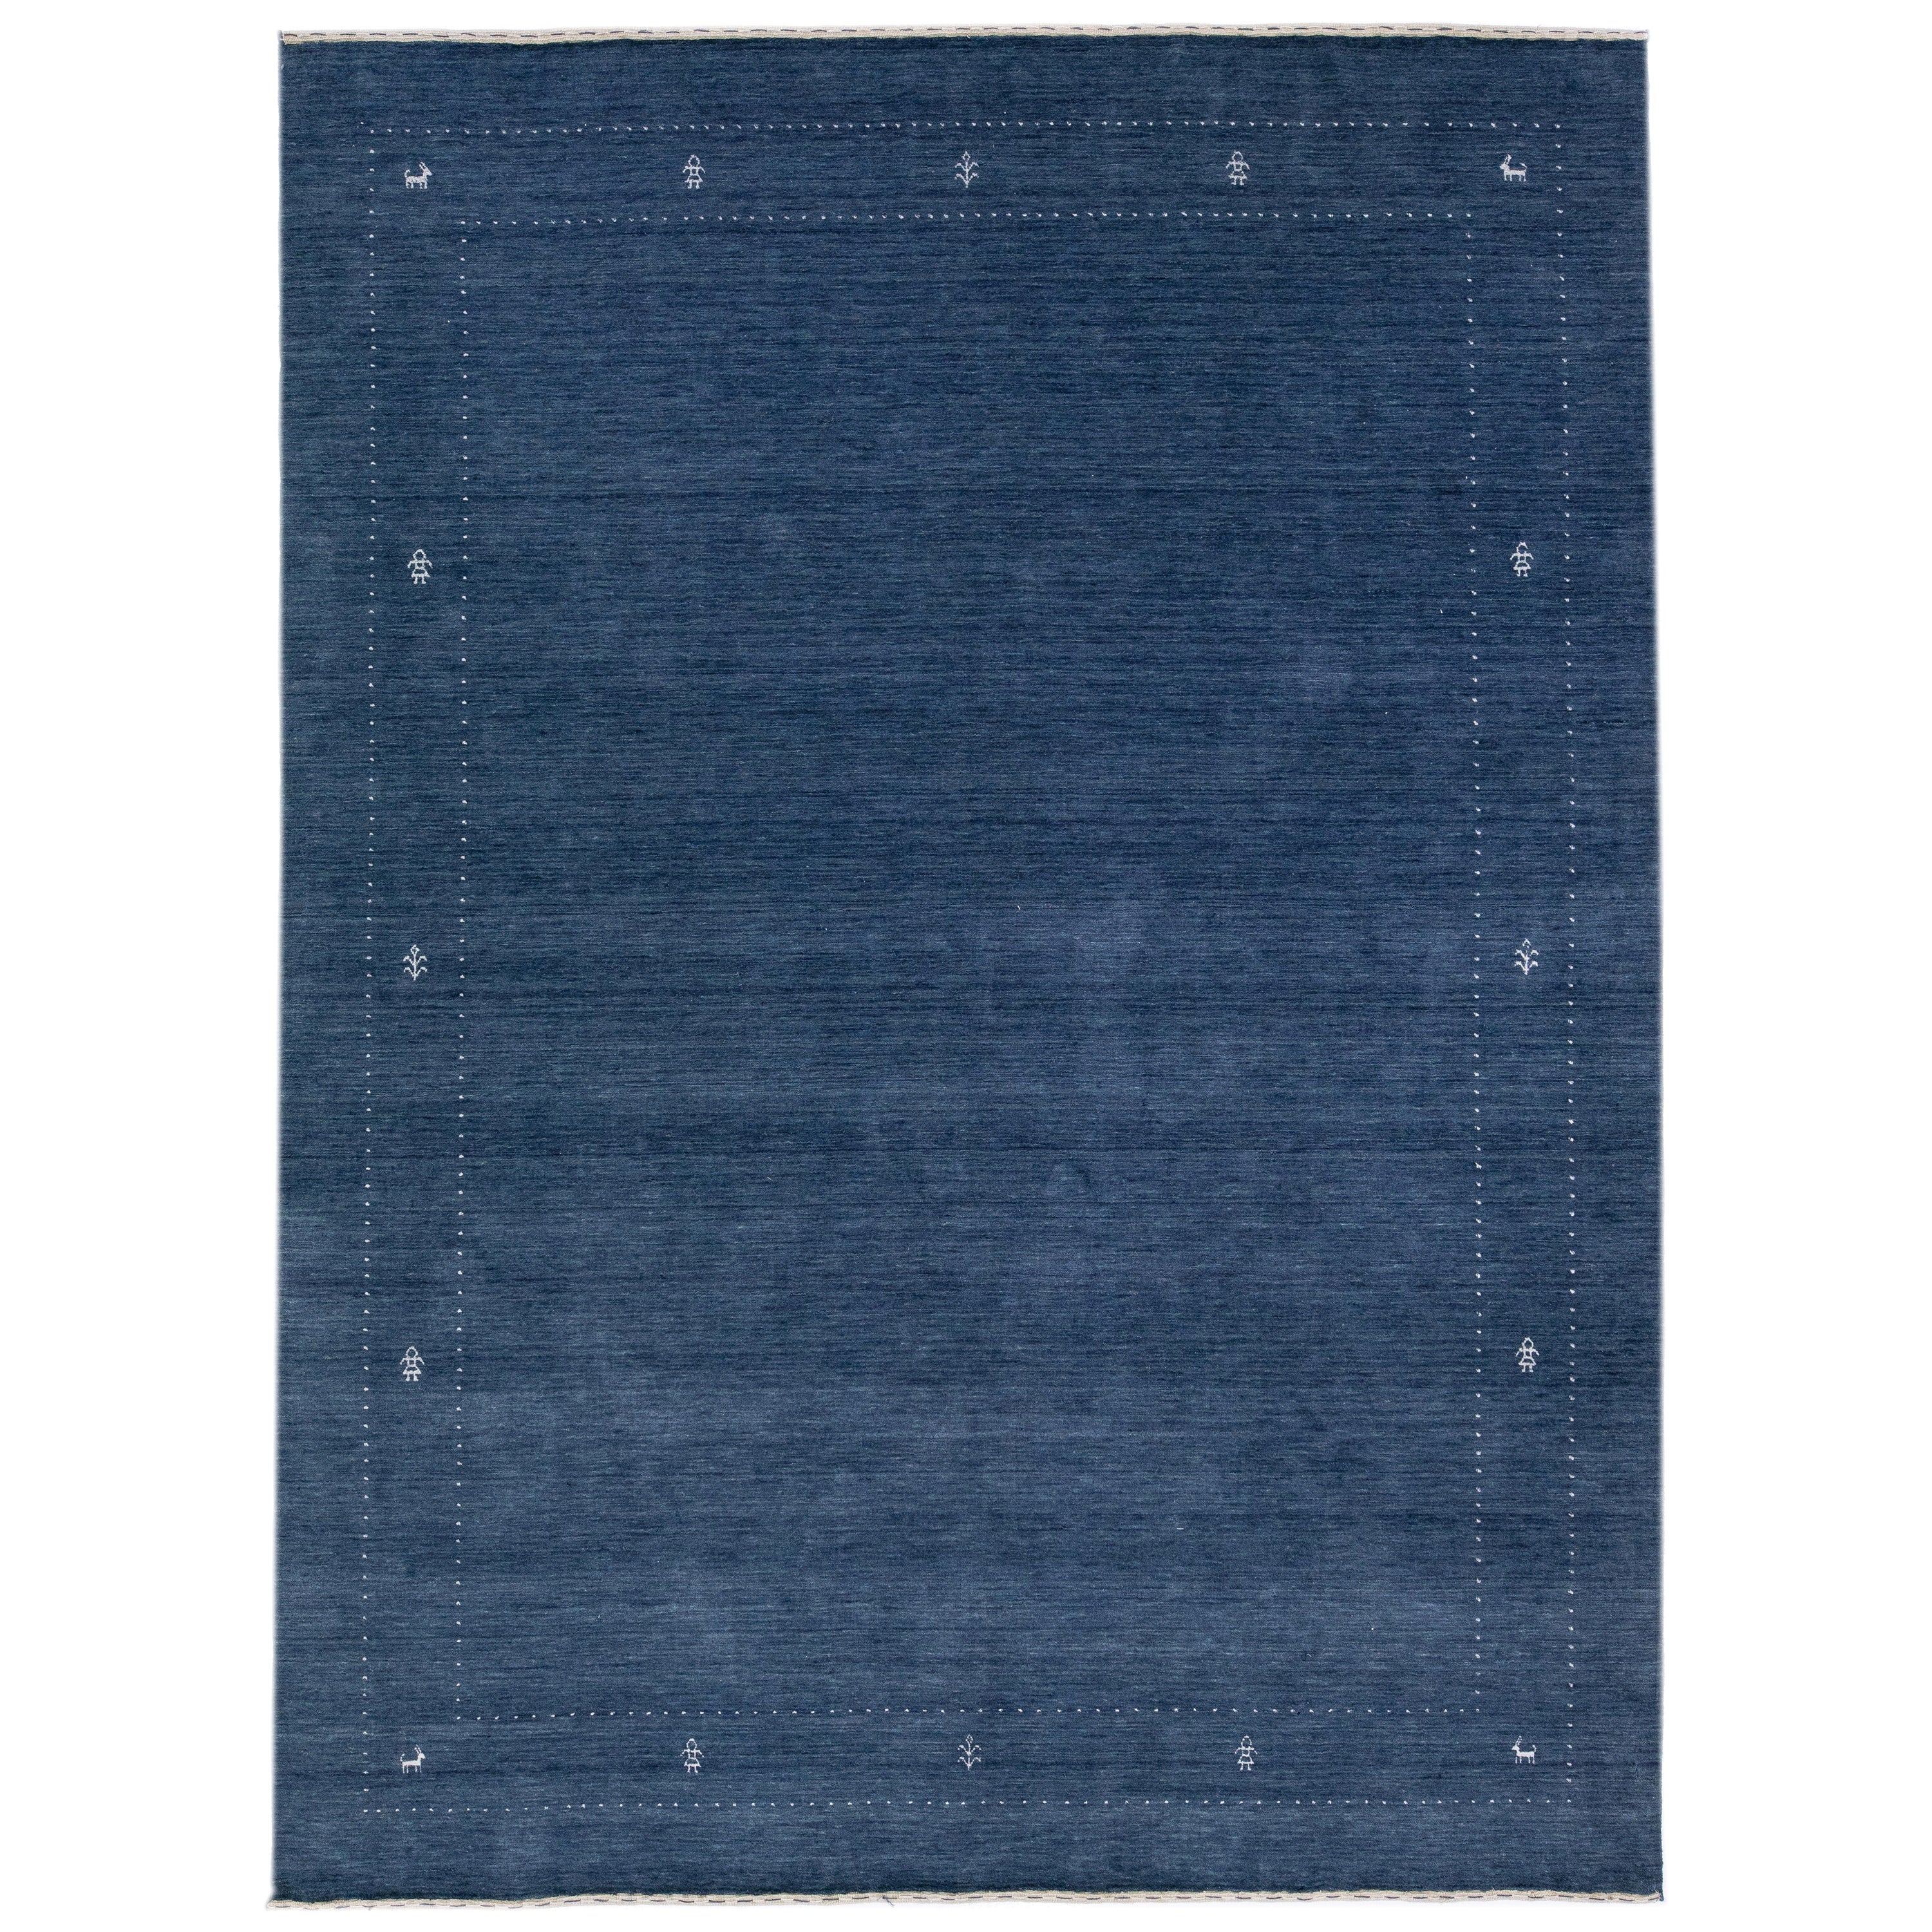  Handmade Modern Gabbeh Style Blue Wool Rug with Minimalist Motif For Sale